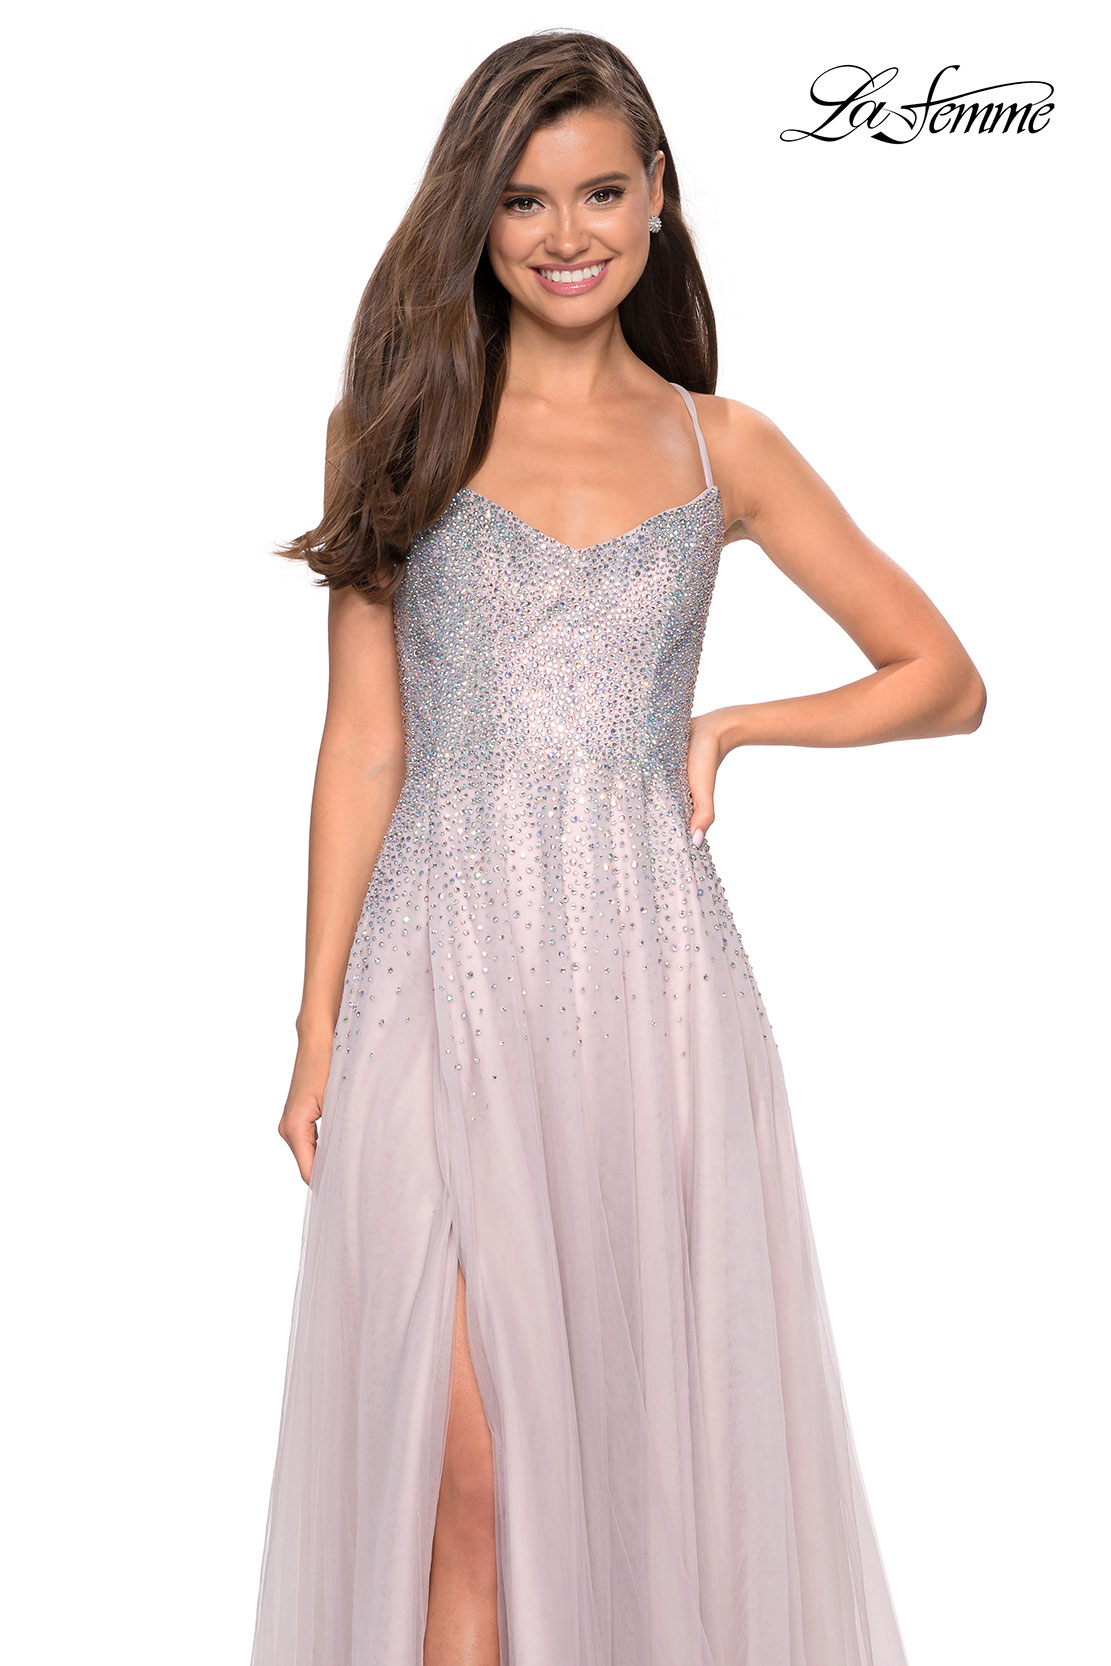 Mauve prom dress with rhinestone bodice